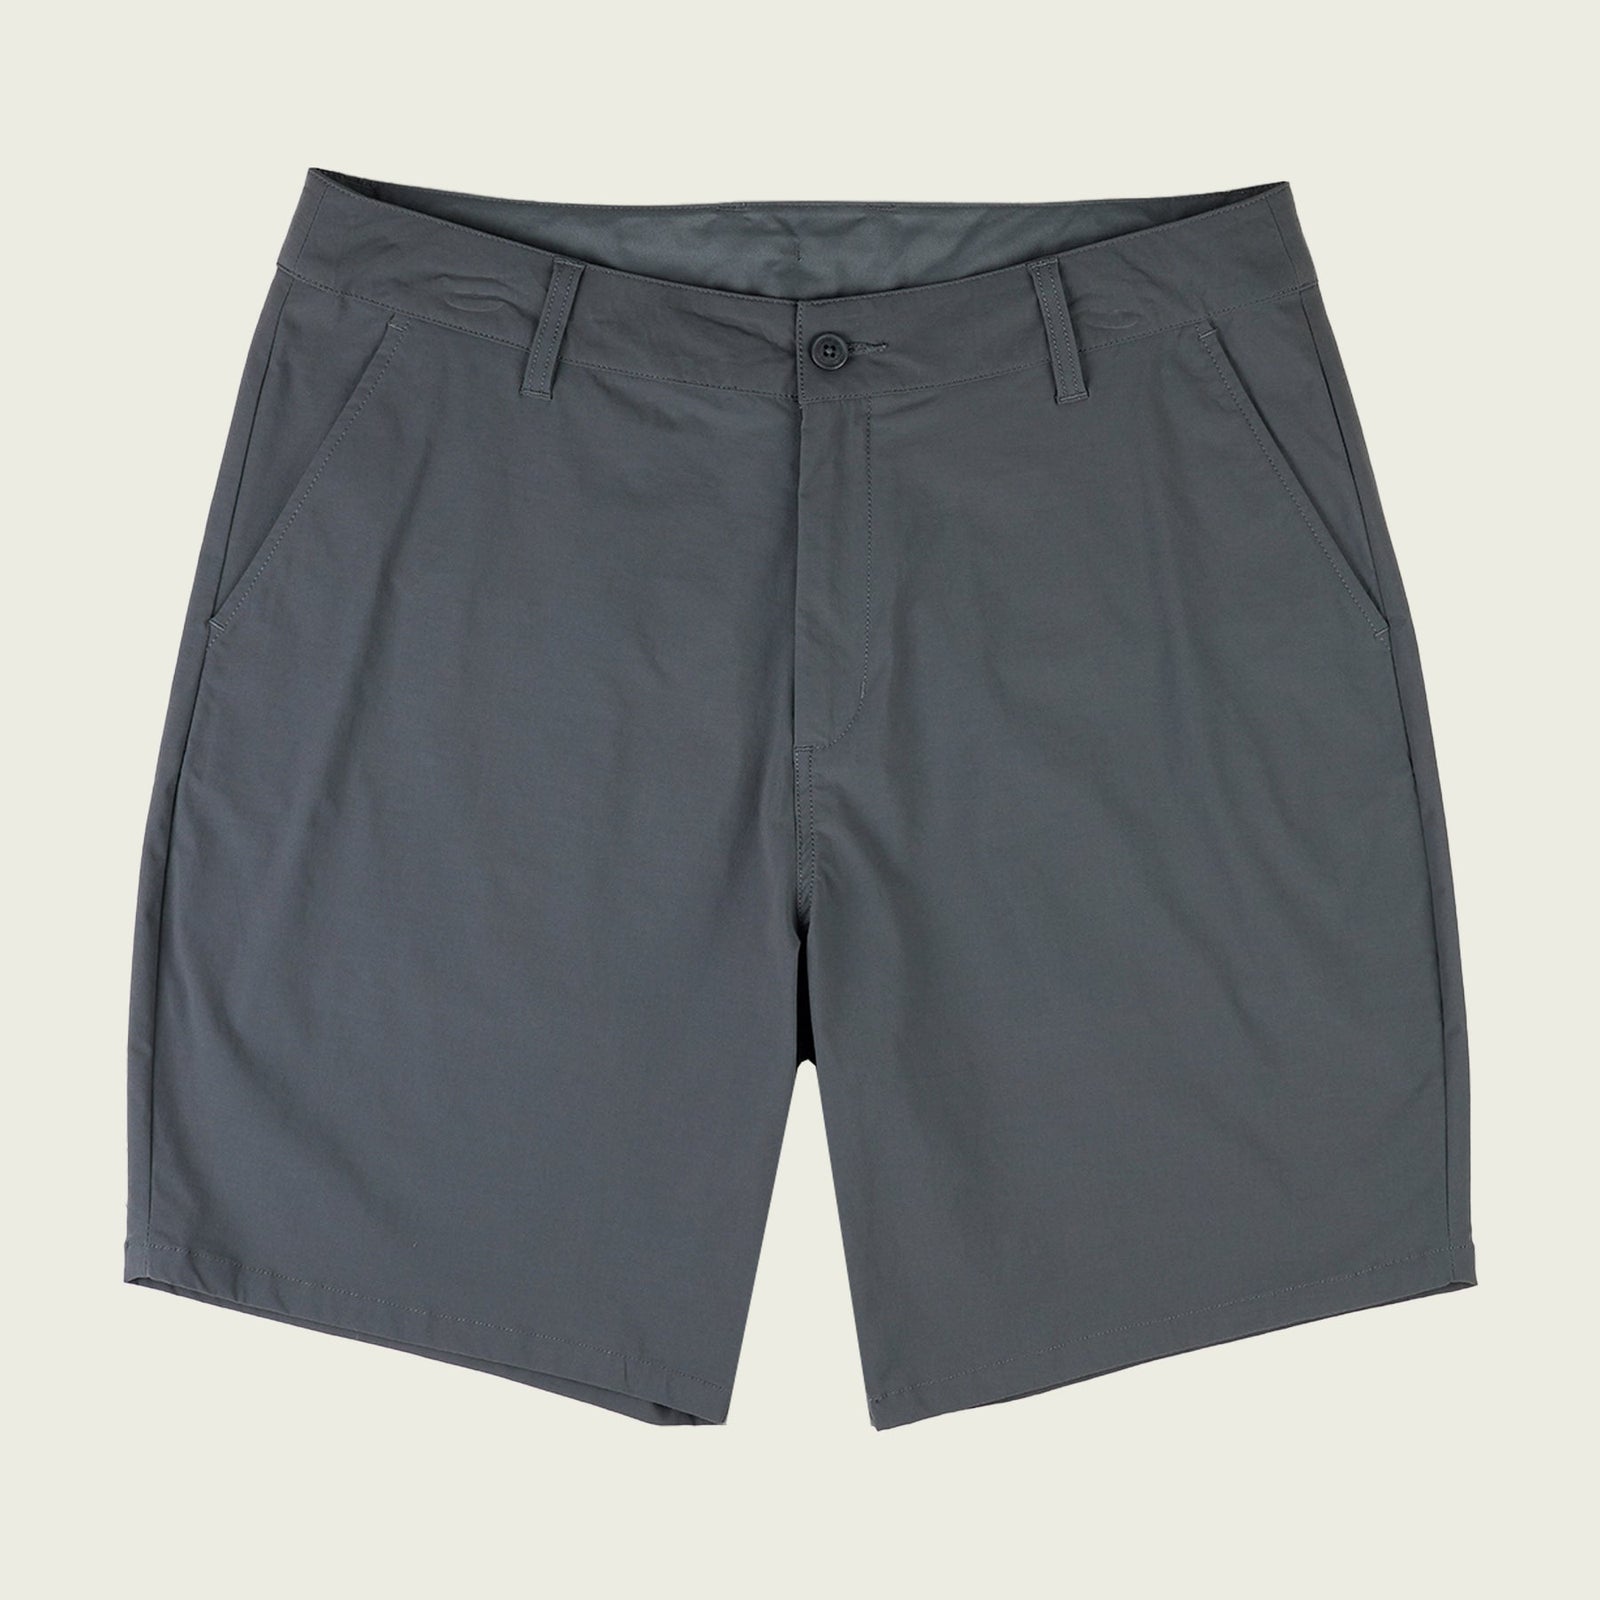 Men's Prime Shorts - Charcoal